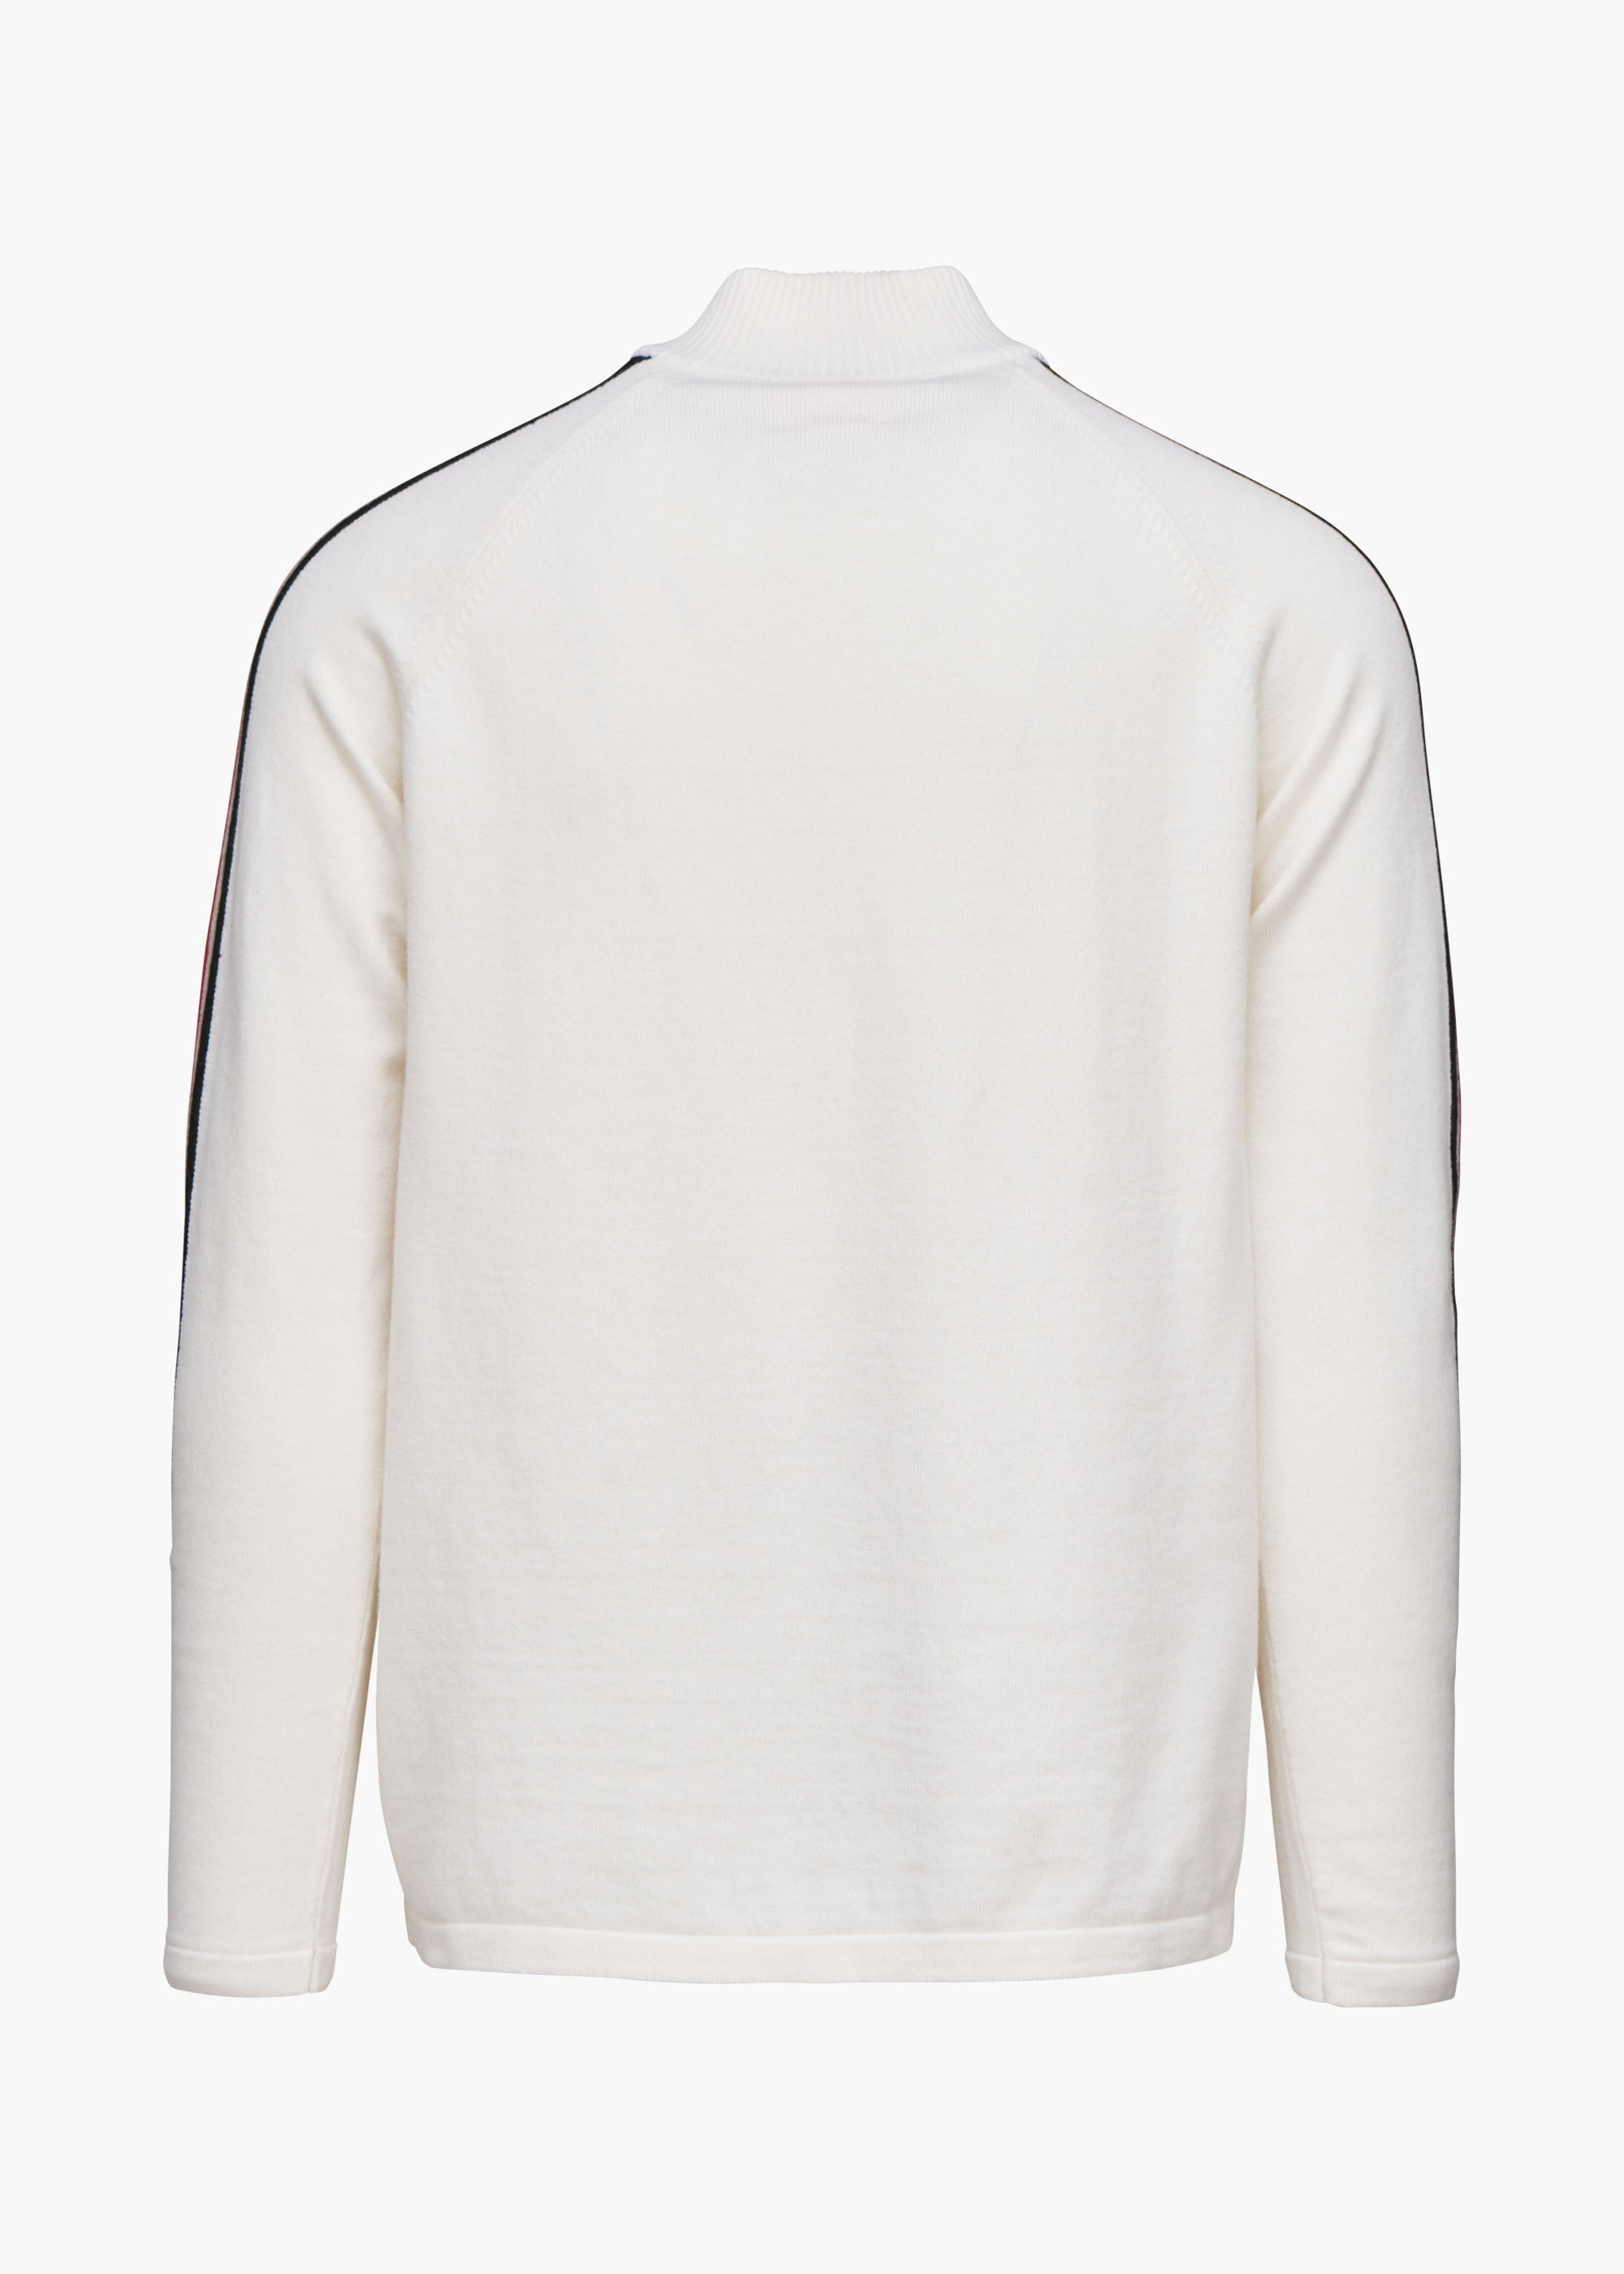 Andorra Sweater - background::white,variant::White